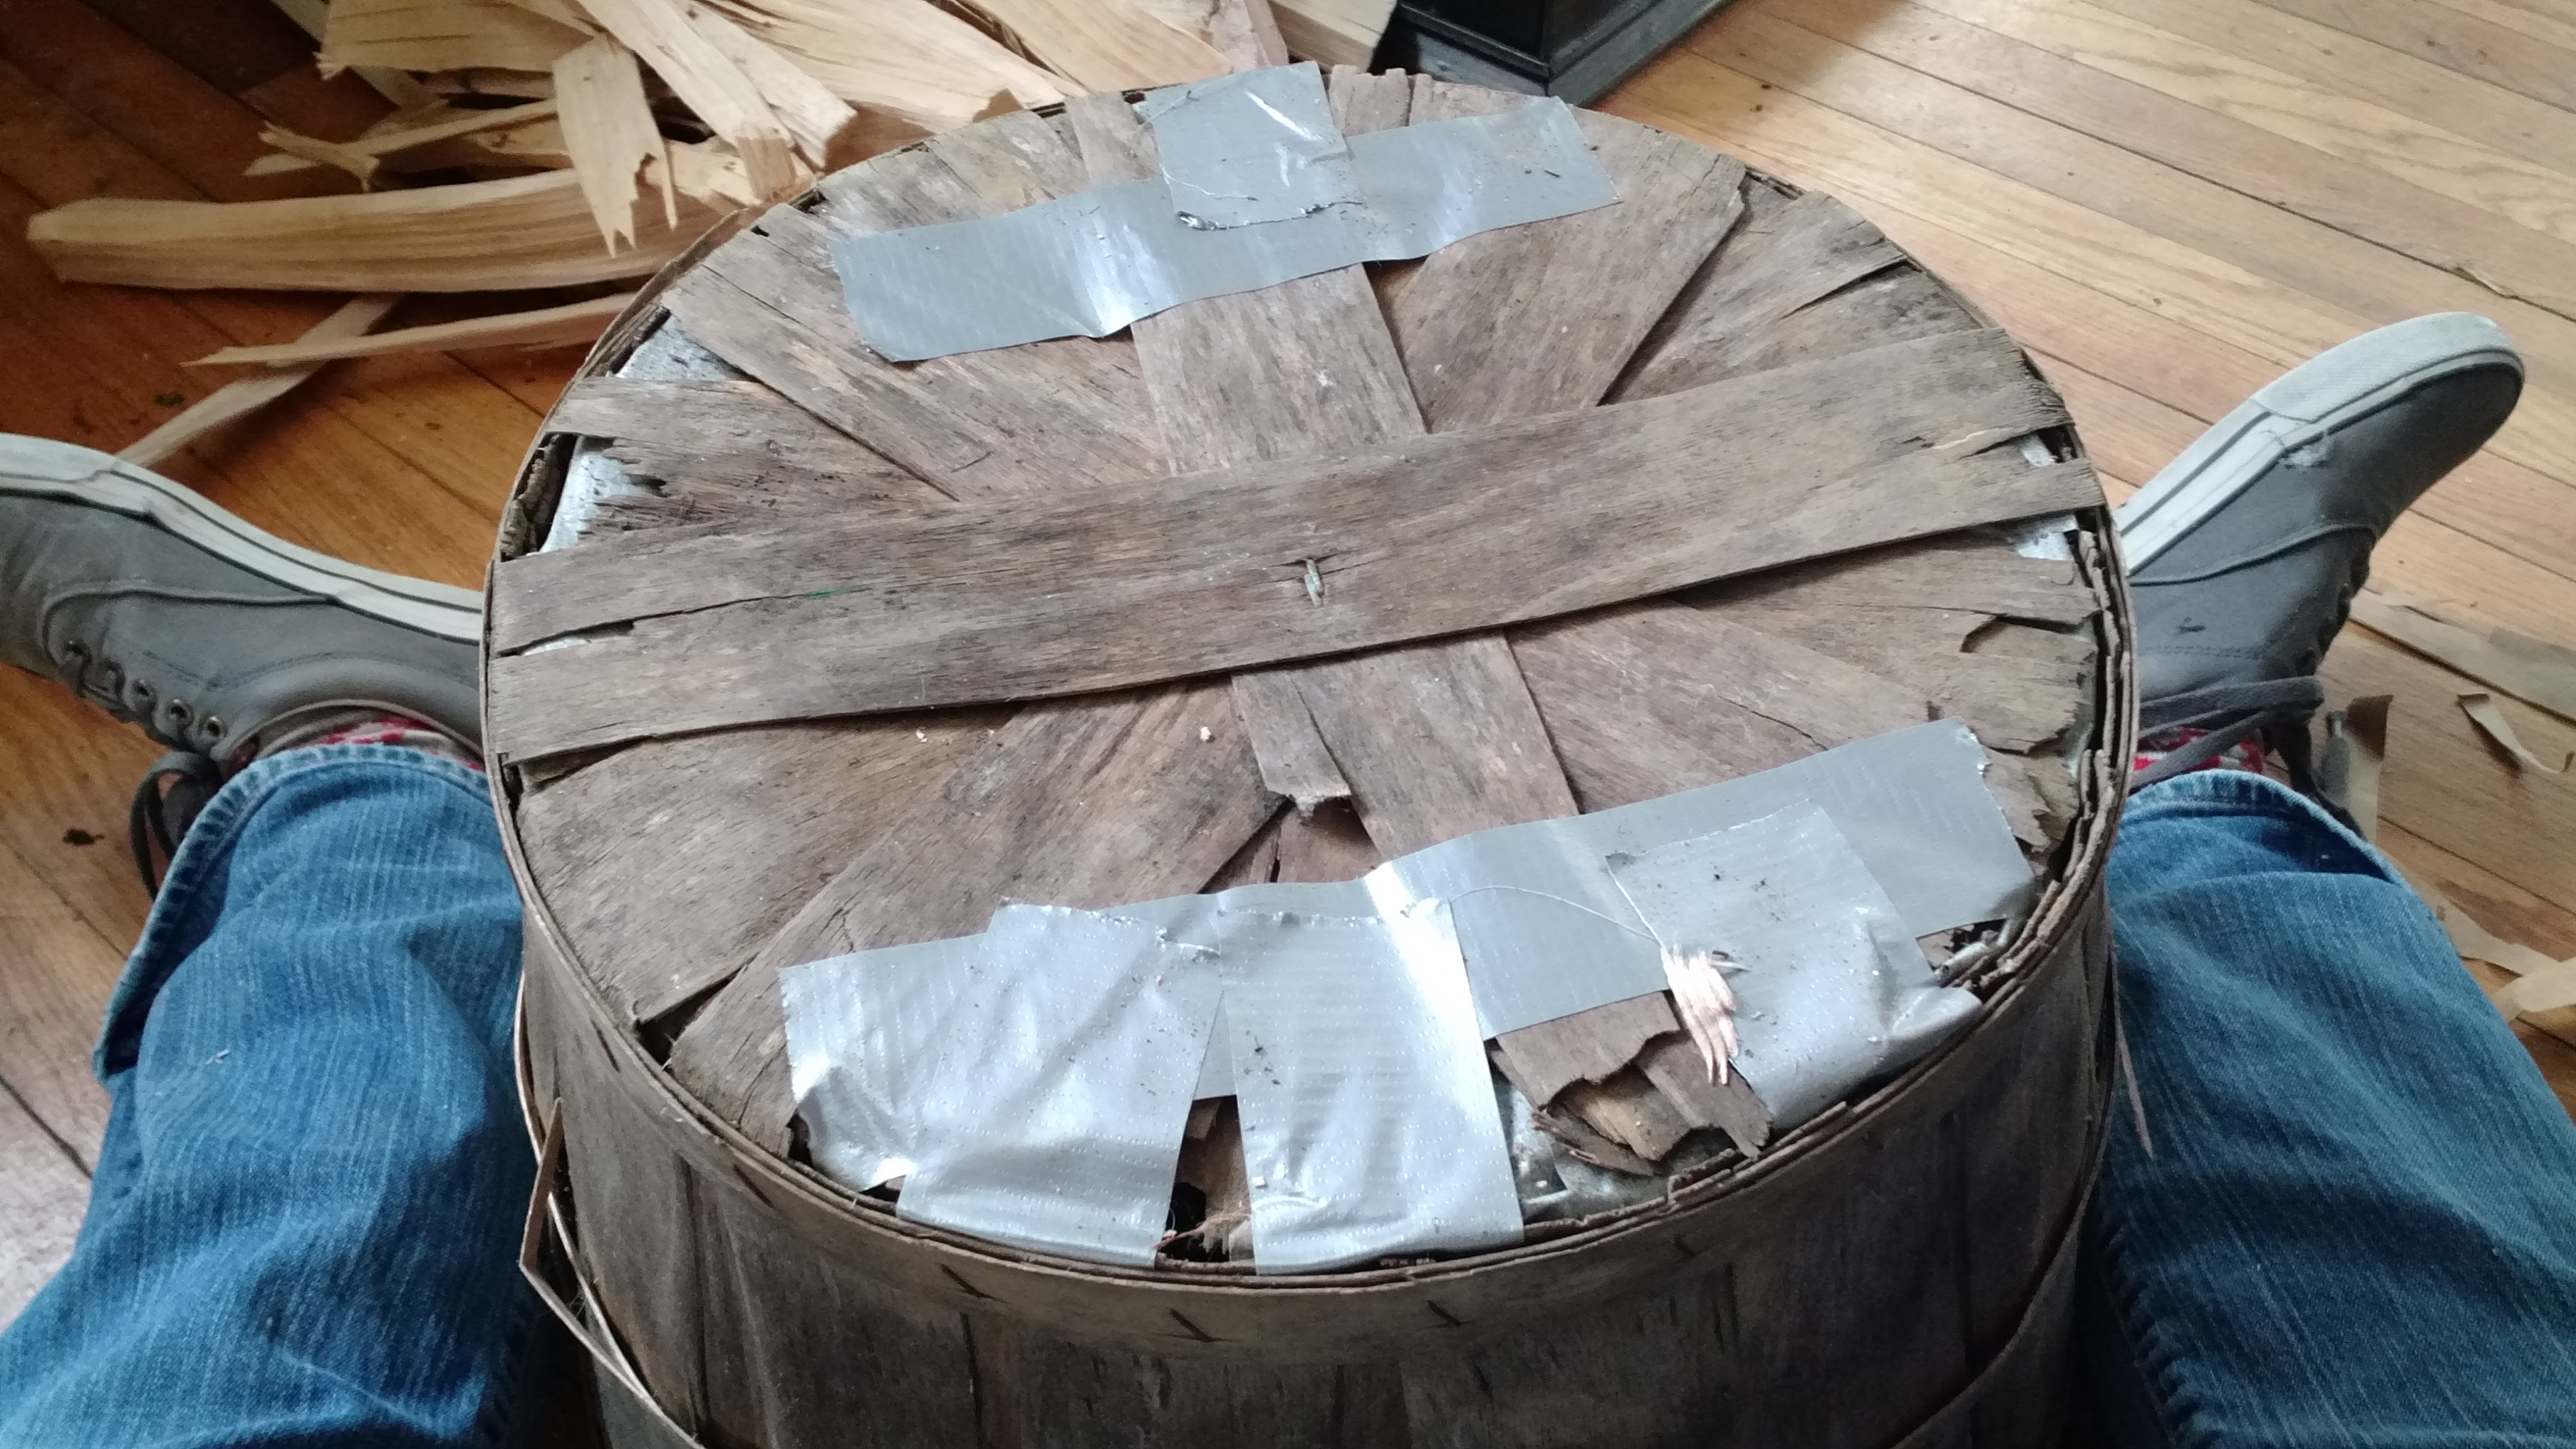 Duct tape work on outside bottom of basket